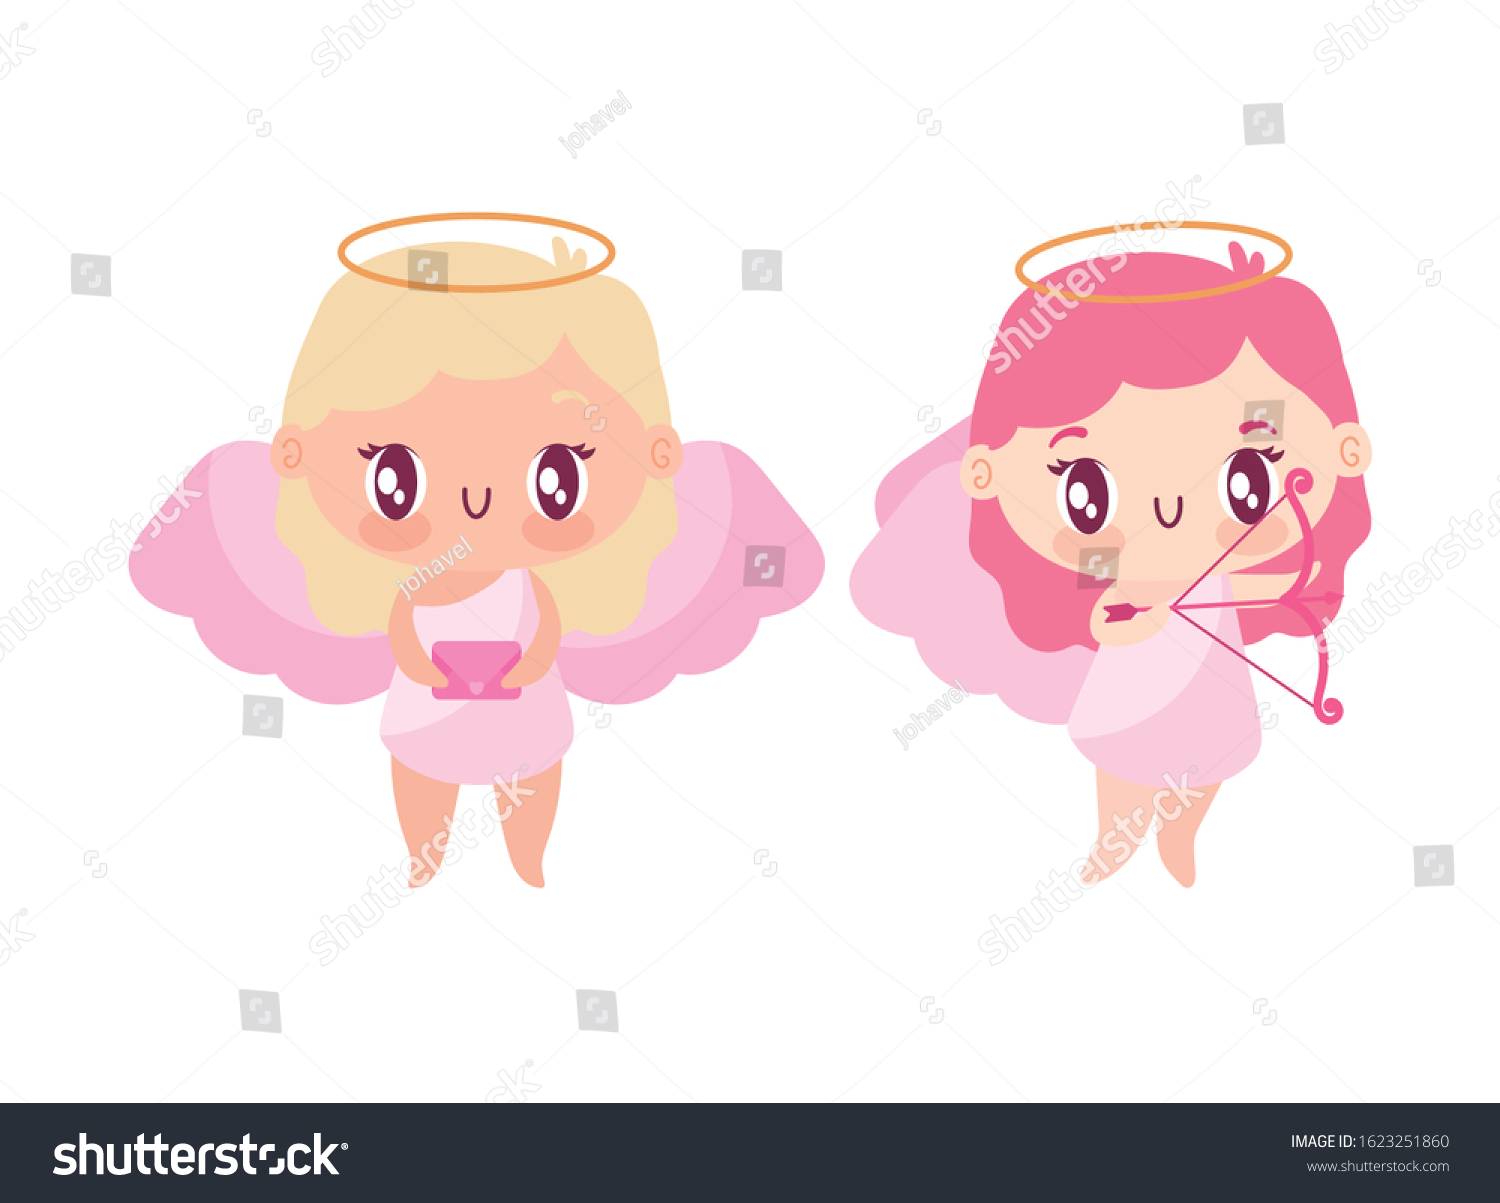 Girls Cupids Cartoons Design Love Passion Stock Vector Royalty Free 1623251860 Shutterstock 4648